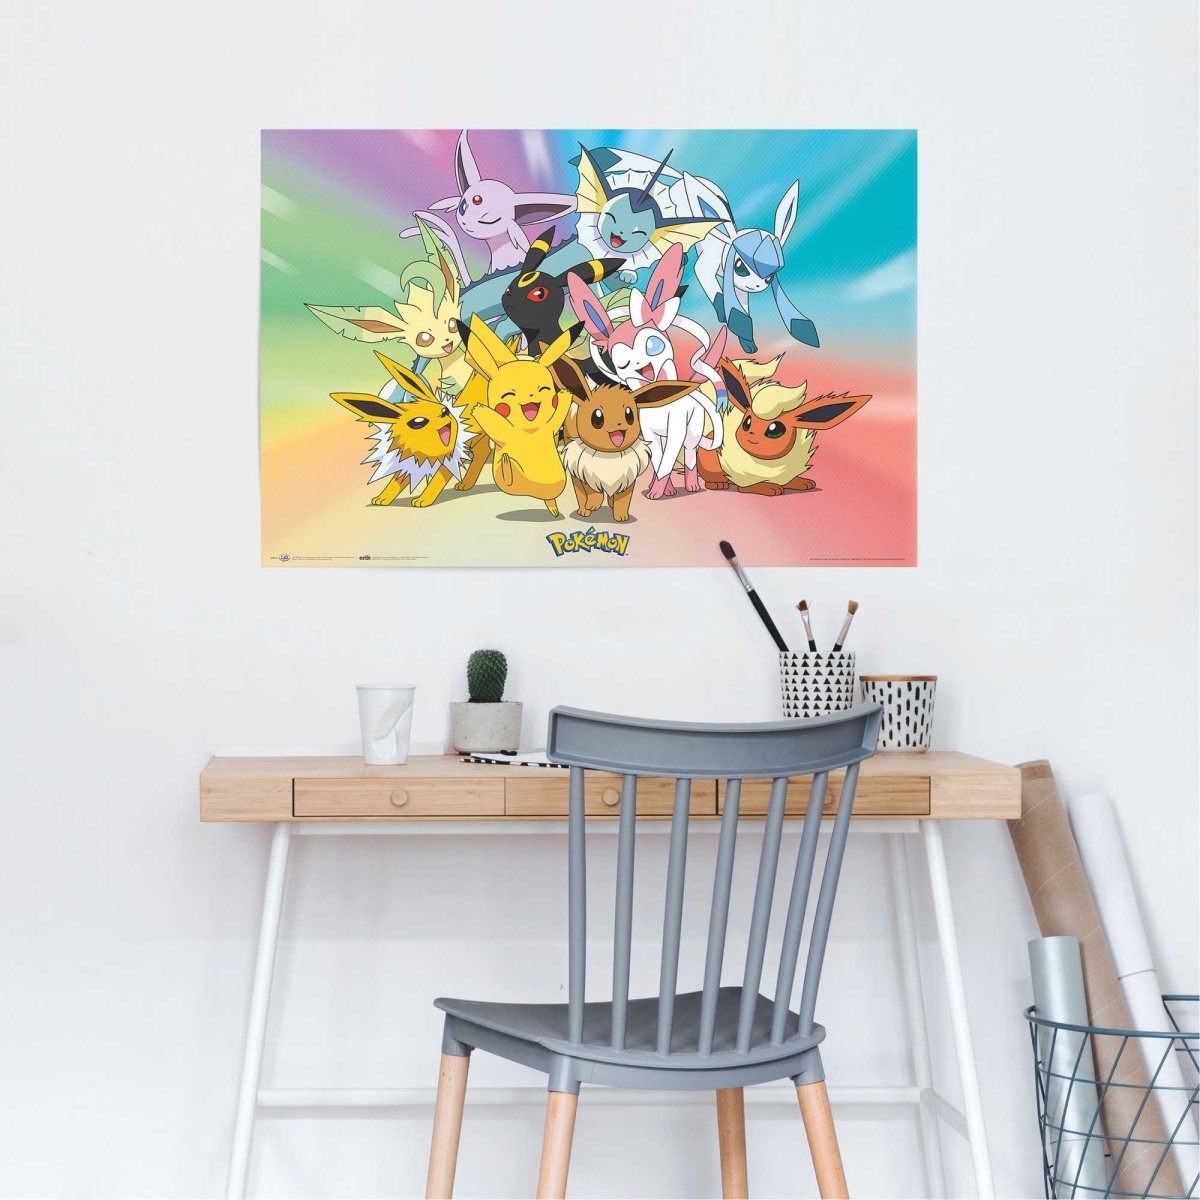 Poster Pokemon 61x91,5 - Reinders